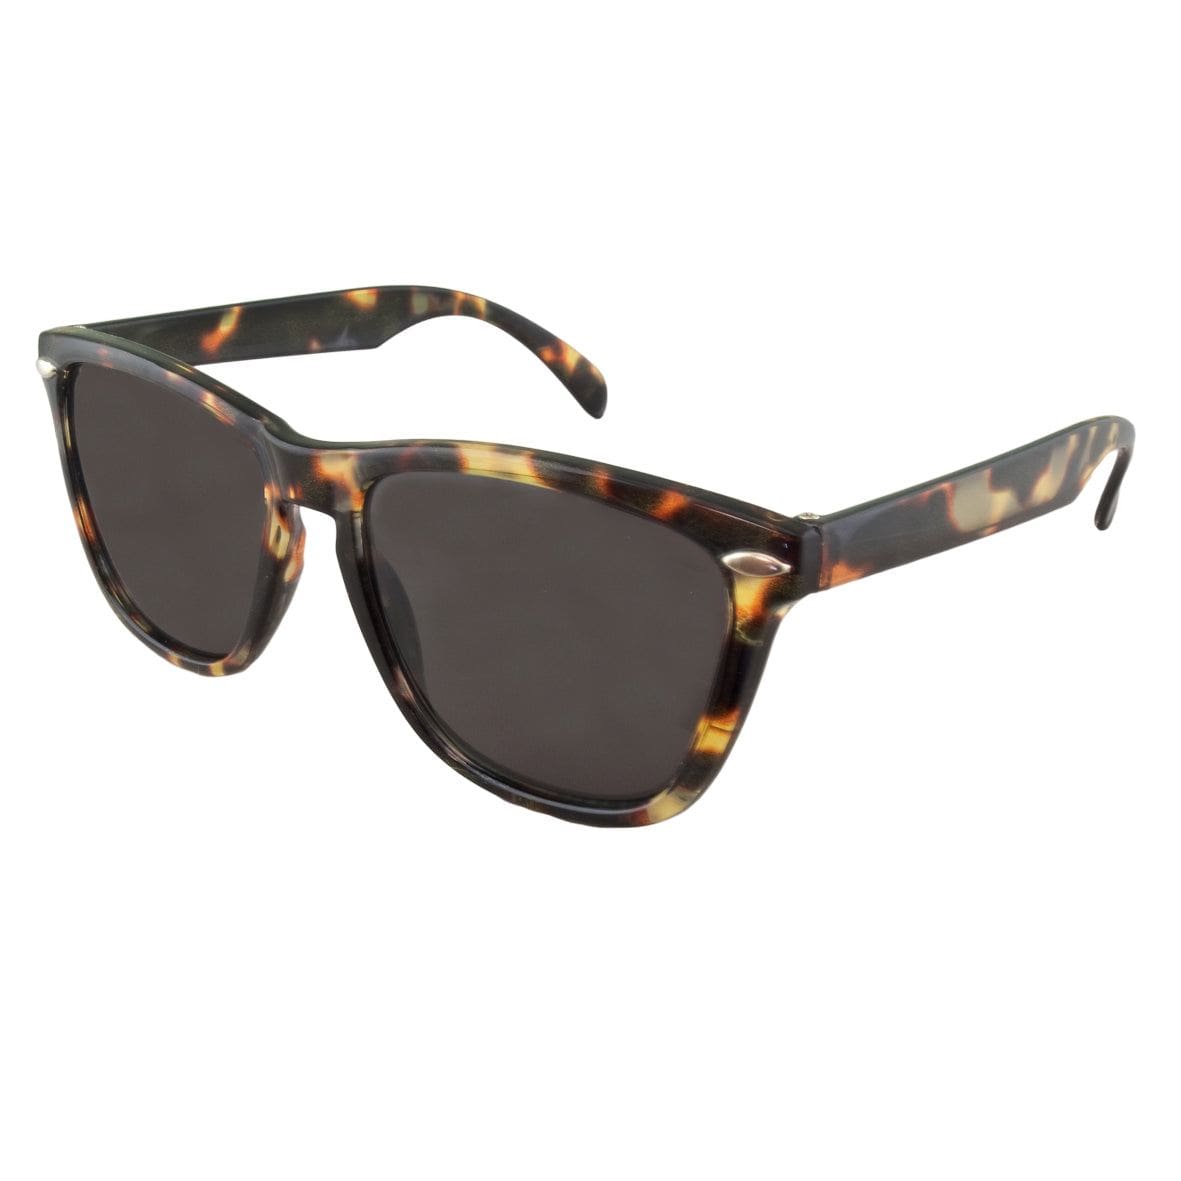 BANZ Sunglasses Kids Sunglasses - Wayfarer Tortoise